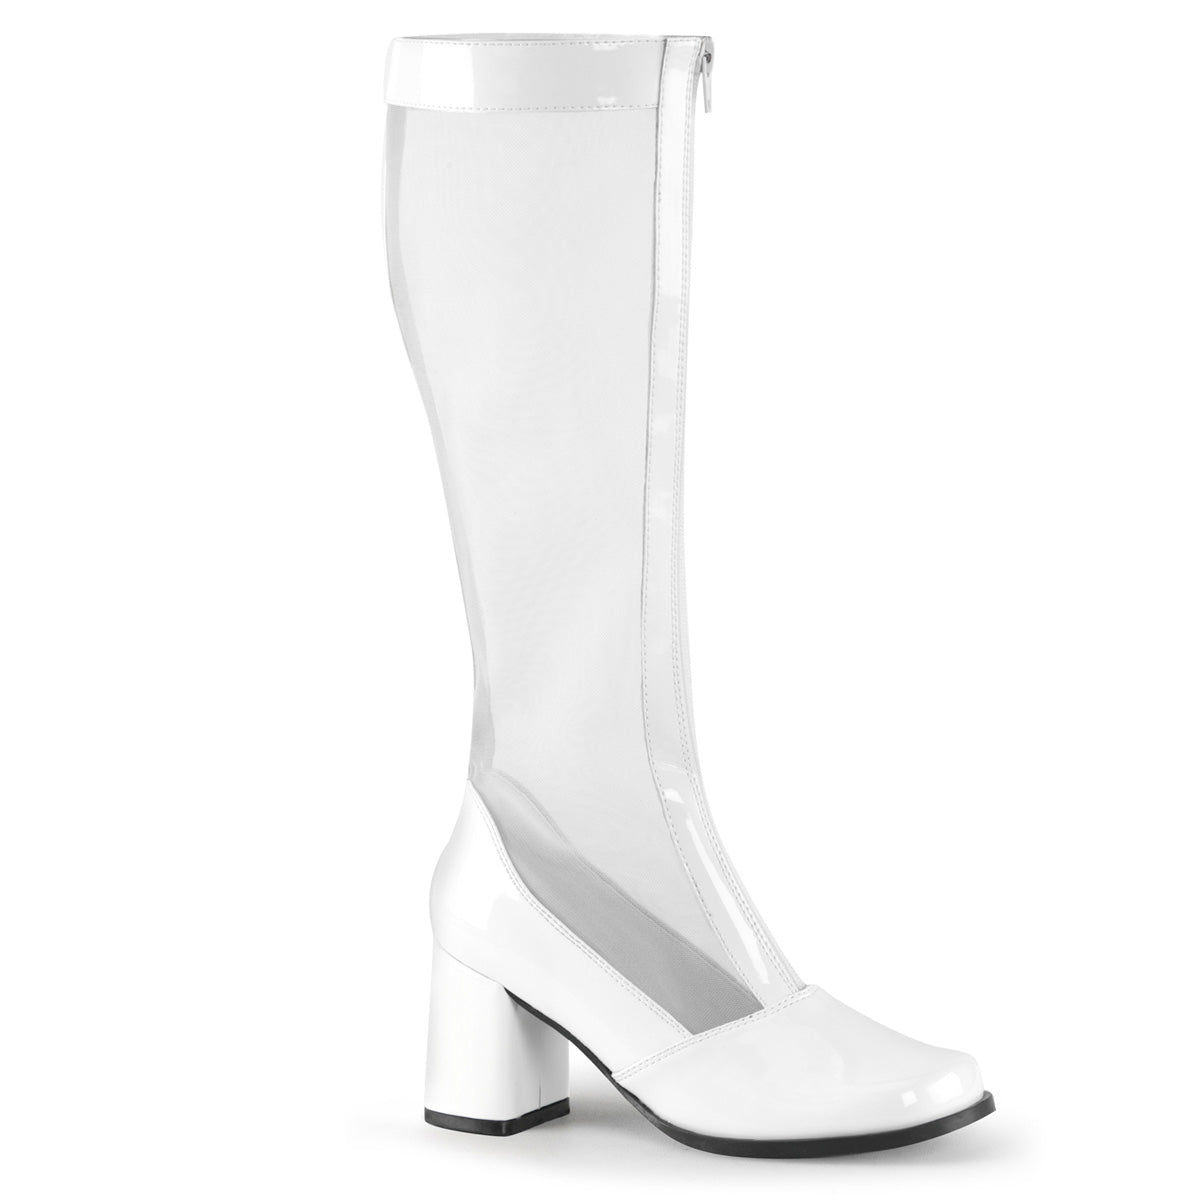 GOGO-307 Pleasers Funtasma 3 Inch Heel White Patent Women's Boots